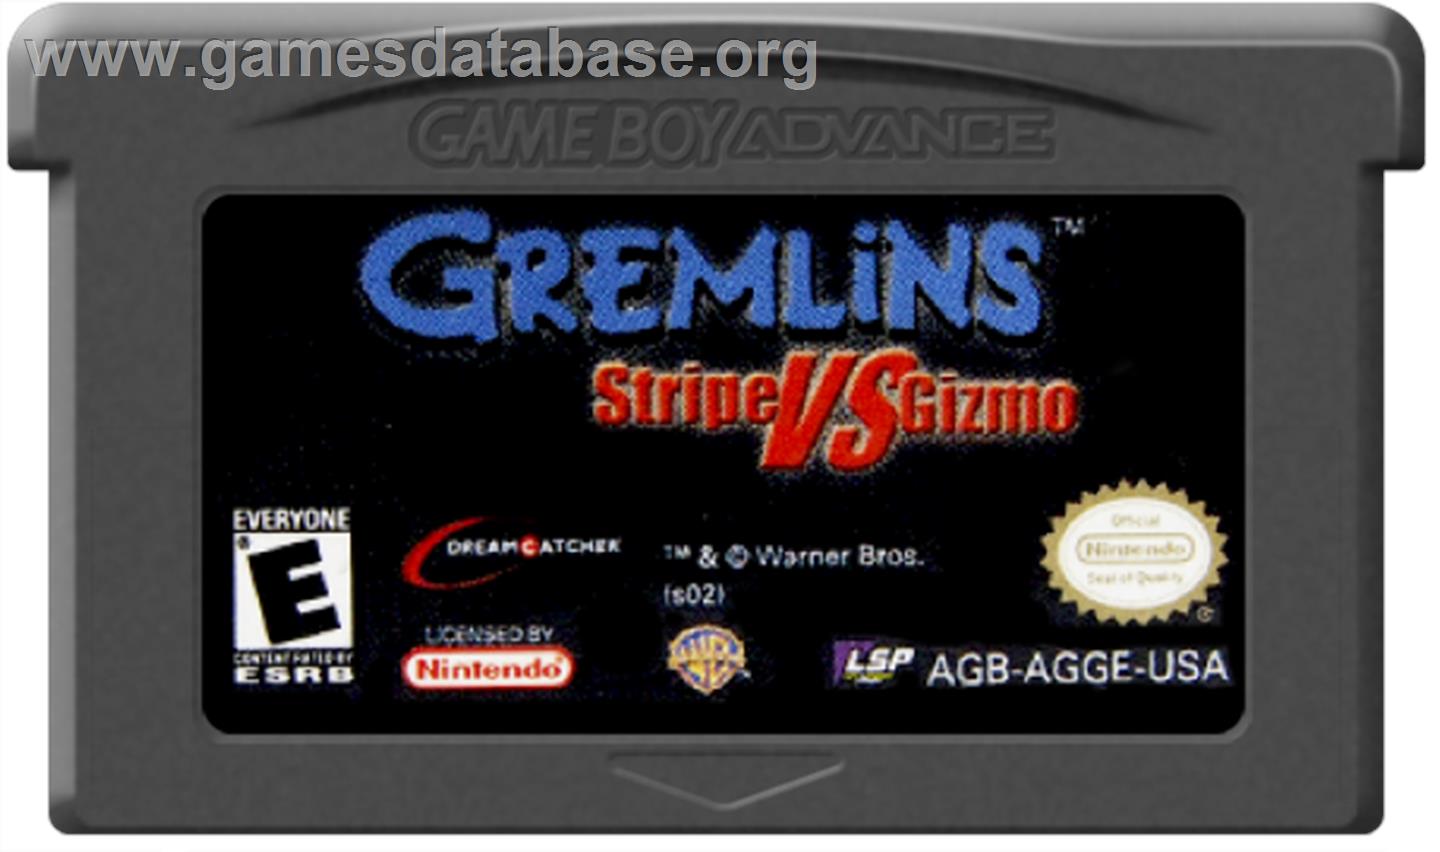 Gremlins: Stripe Vs. Gizmo - Nintendo Game Boy Advance - Artwork - Cartridge